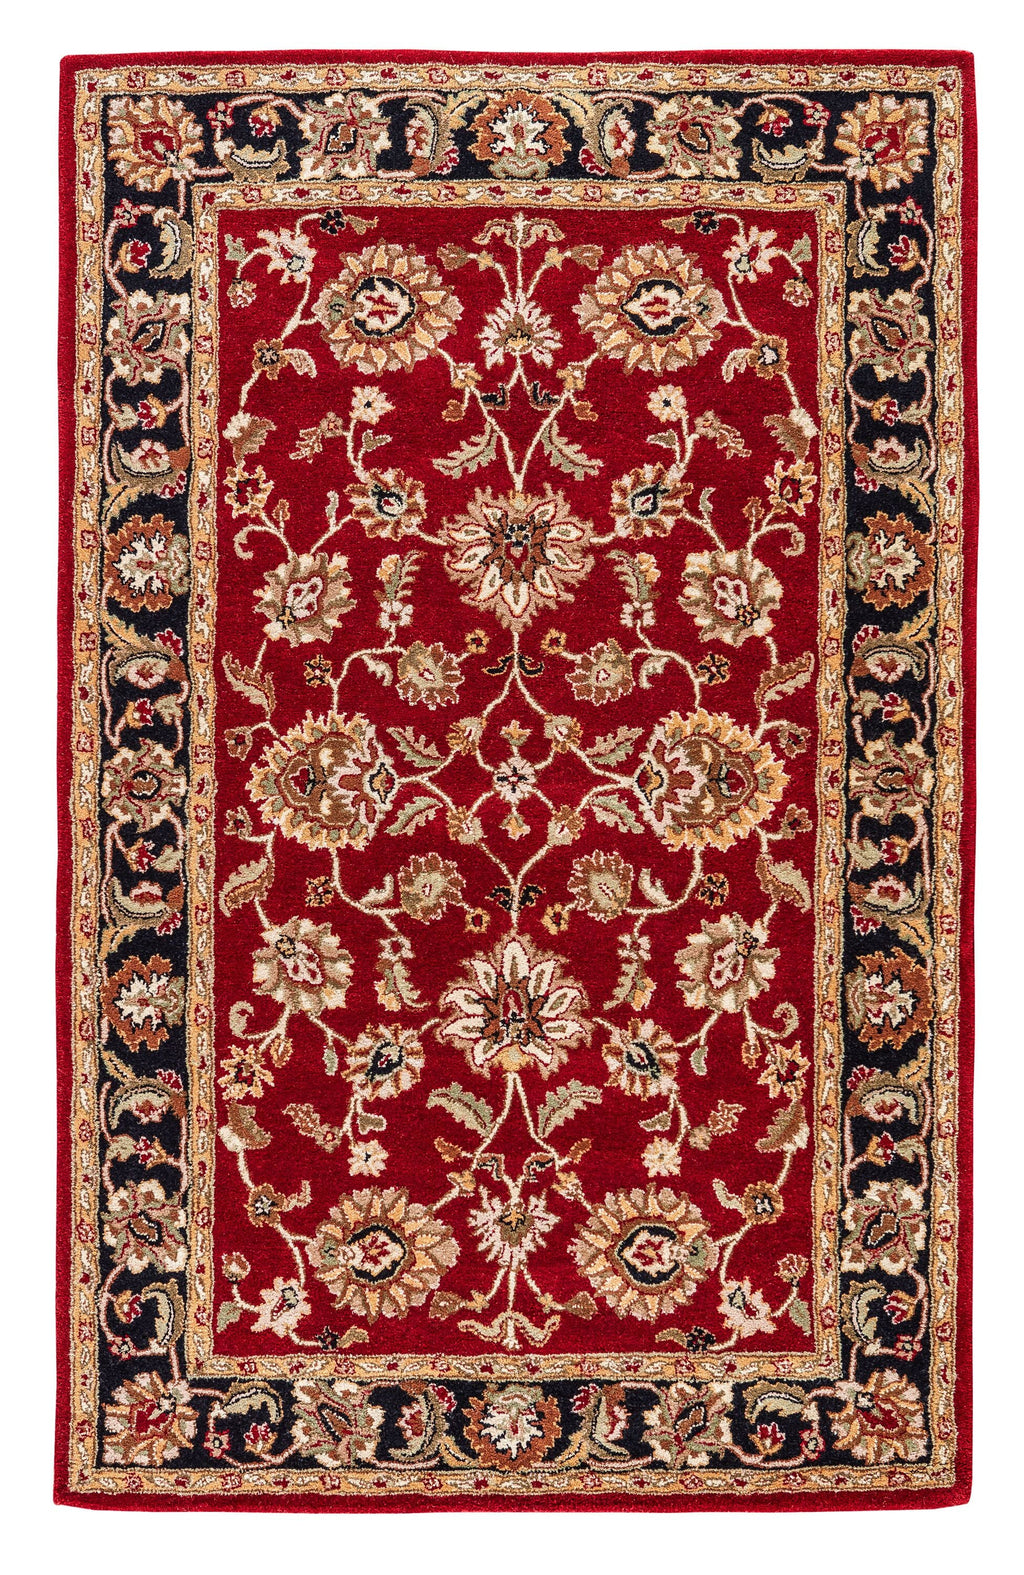 my08 anthea handmade floral red black area rug design by jaipur 1